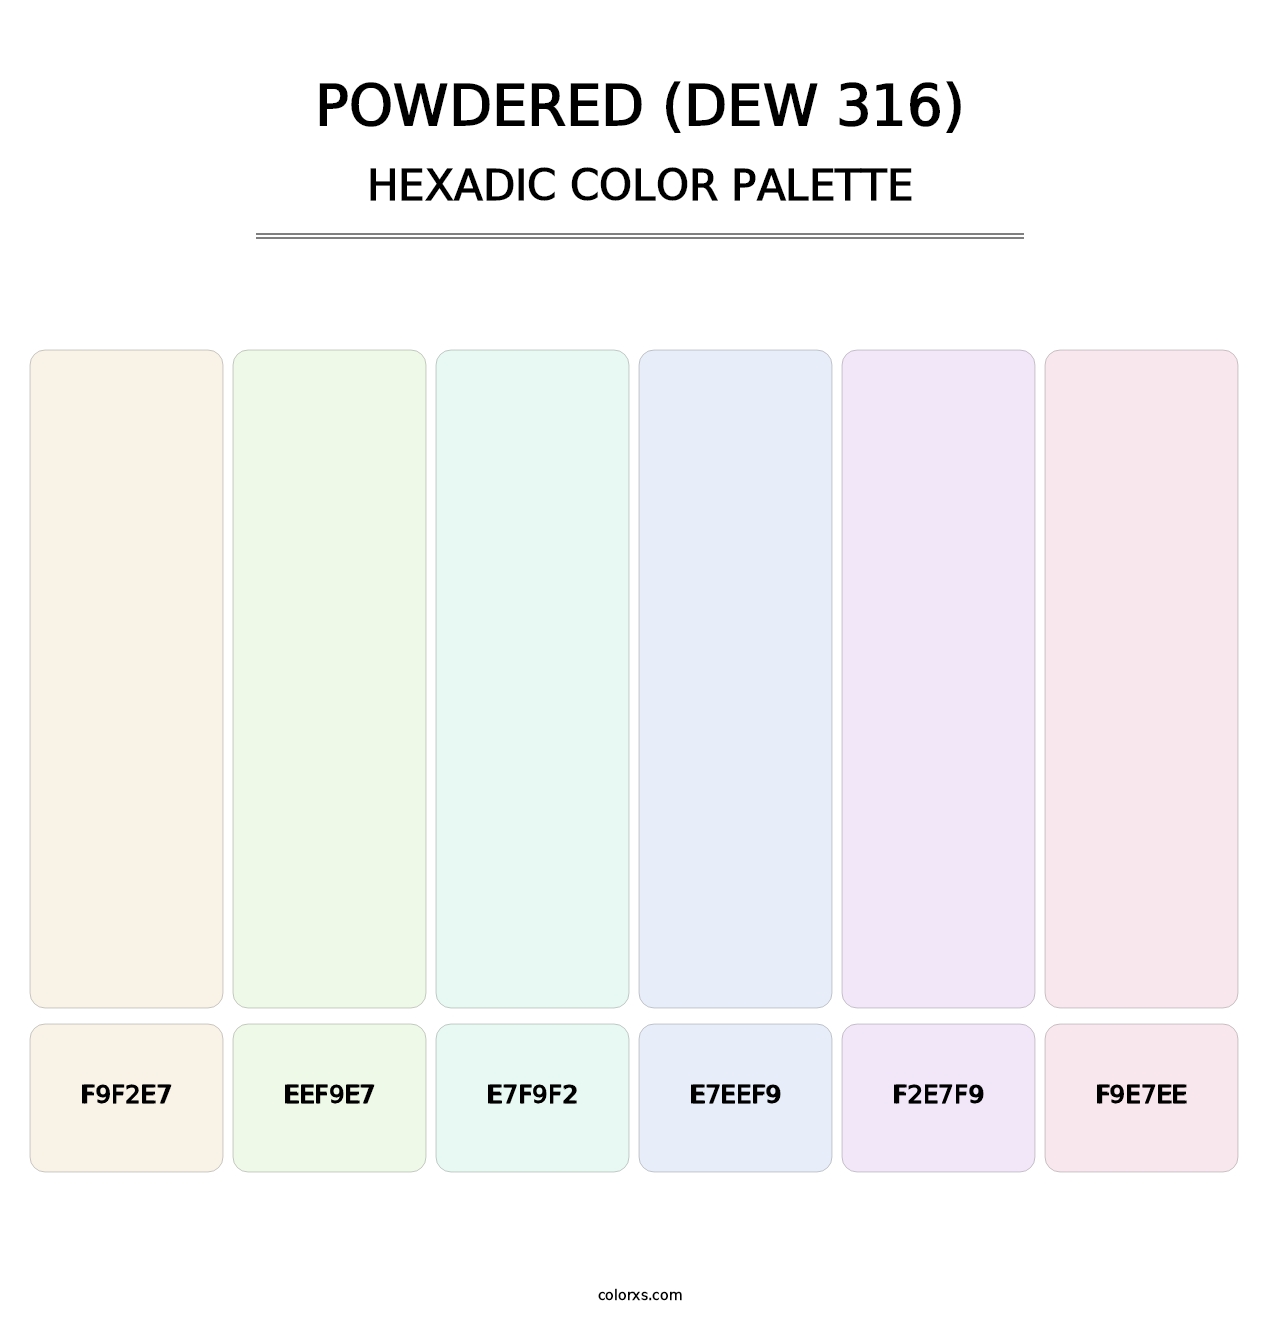 Powdered (DEW 316) - Hexadic Color Palette